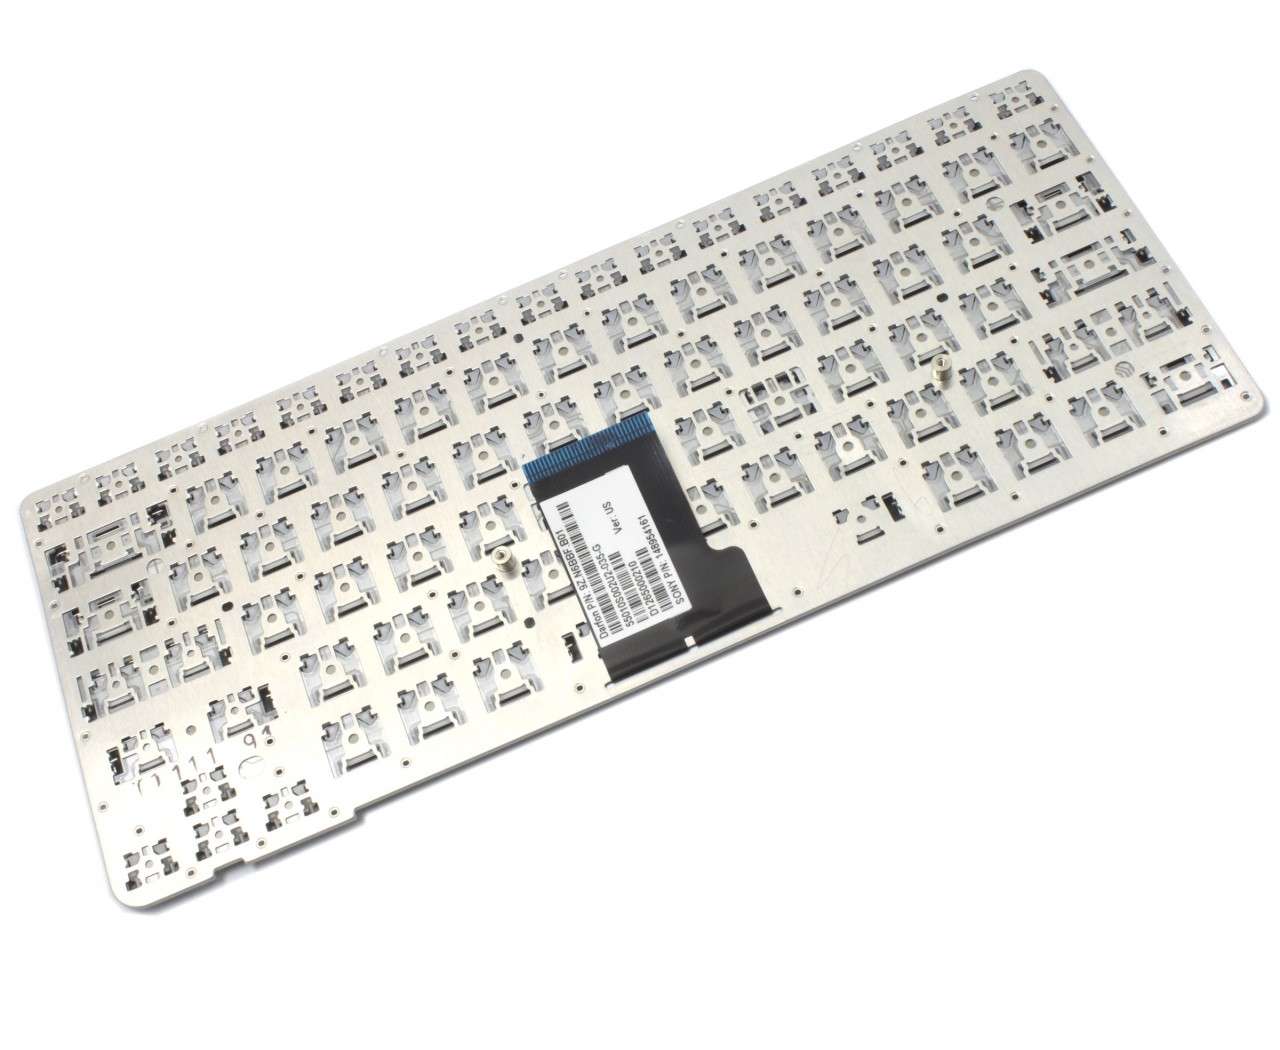 Tastatura argintie Sony Vaio VPCCA3s1e g layout US fara rama enter mic